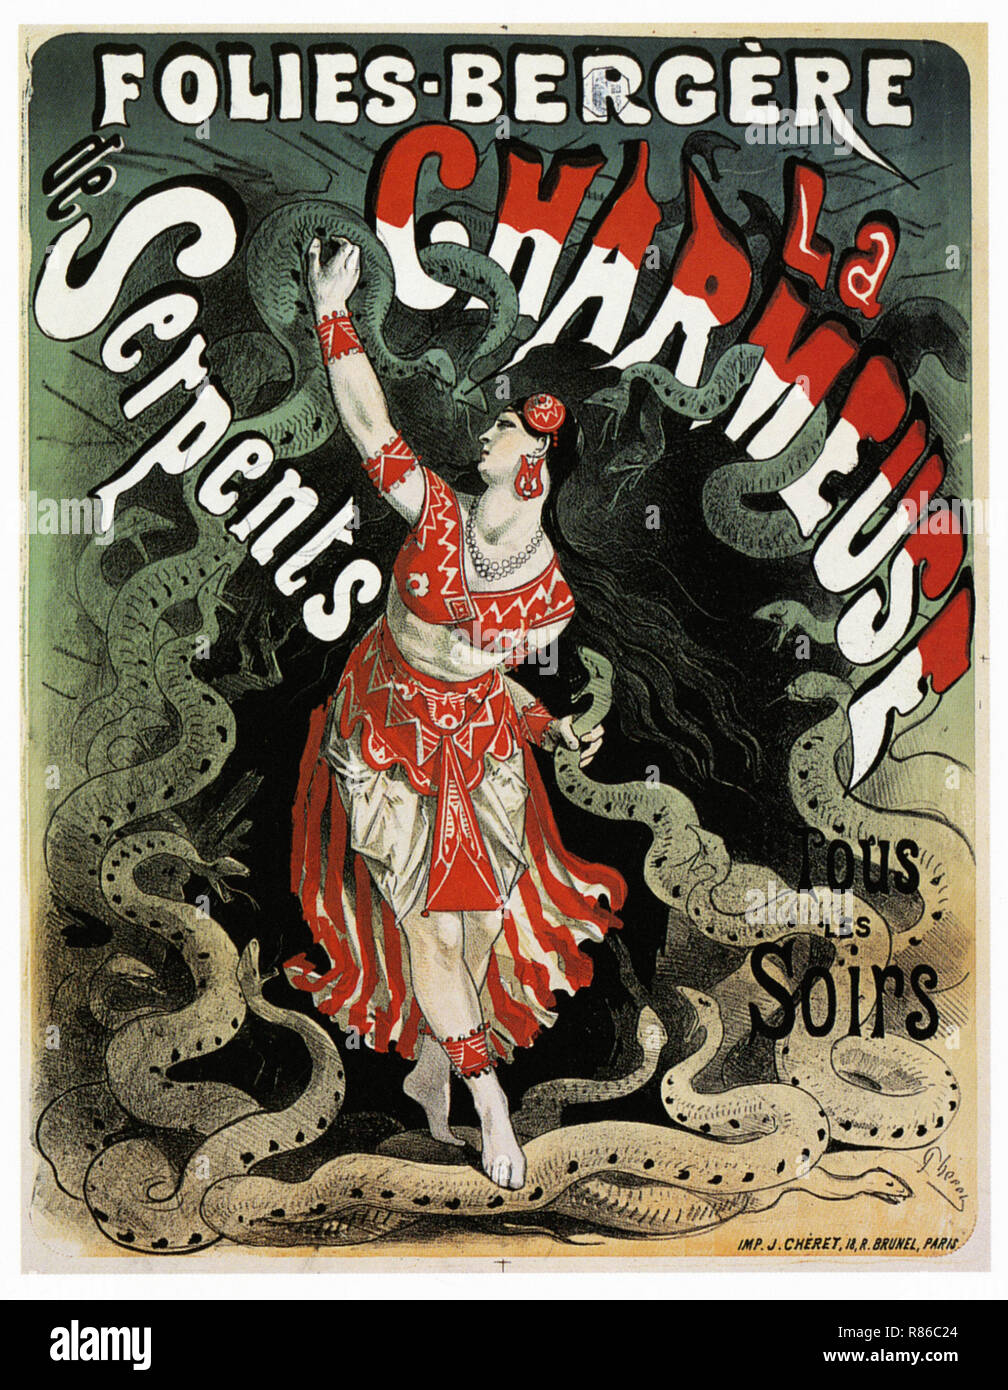 L'incantatore di serpenti Folies Bergeres - Vintage poster pubblicitario Foto Stock